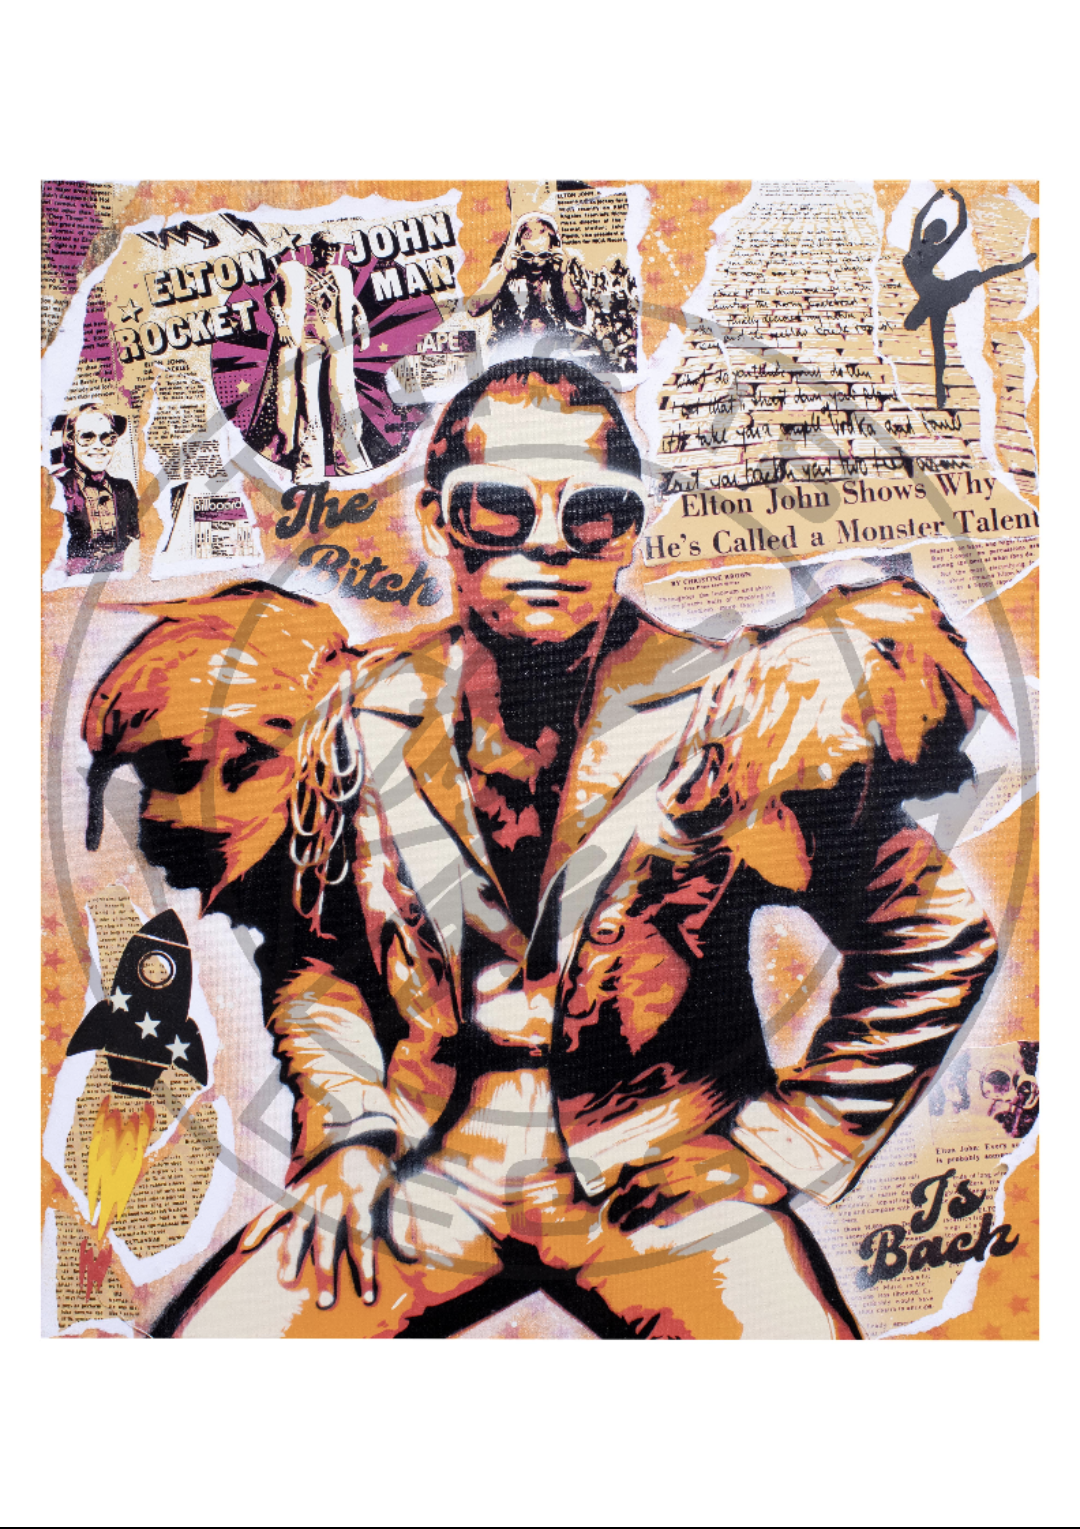 Elton John "Rocket Man" Giclée Print